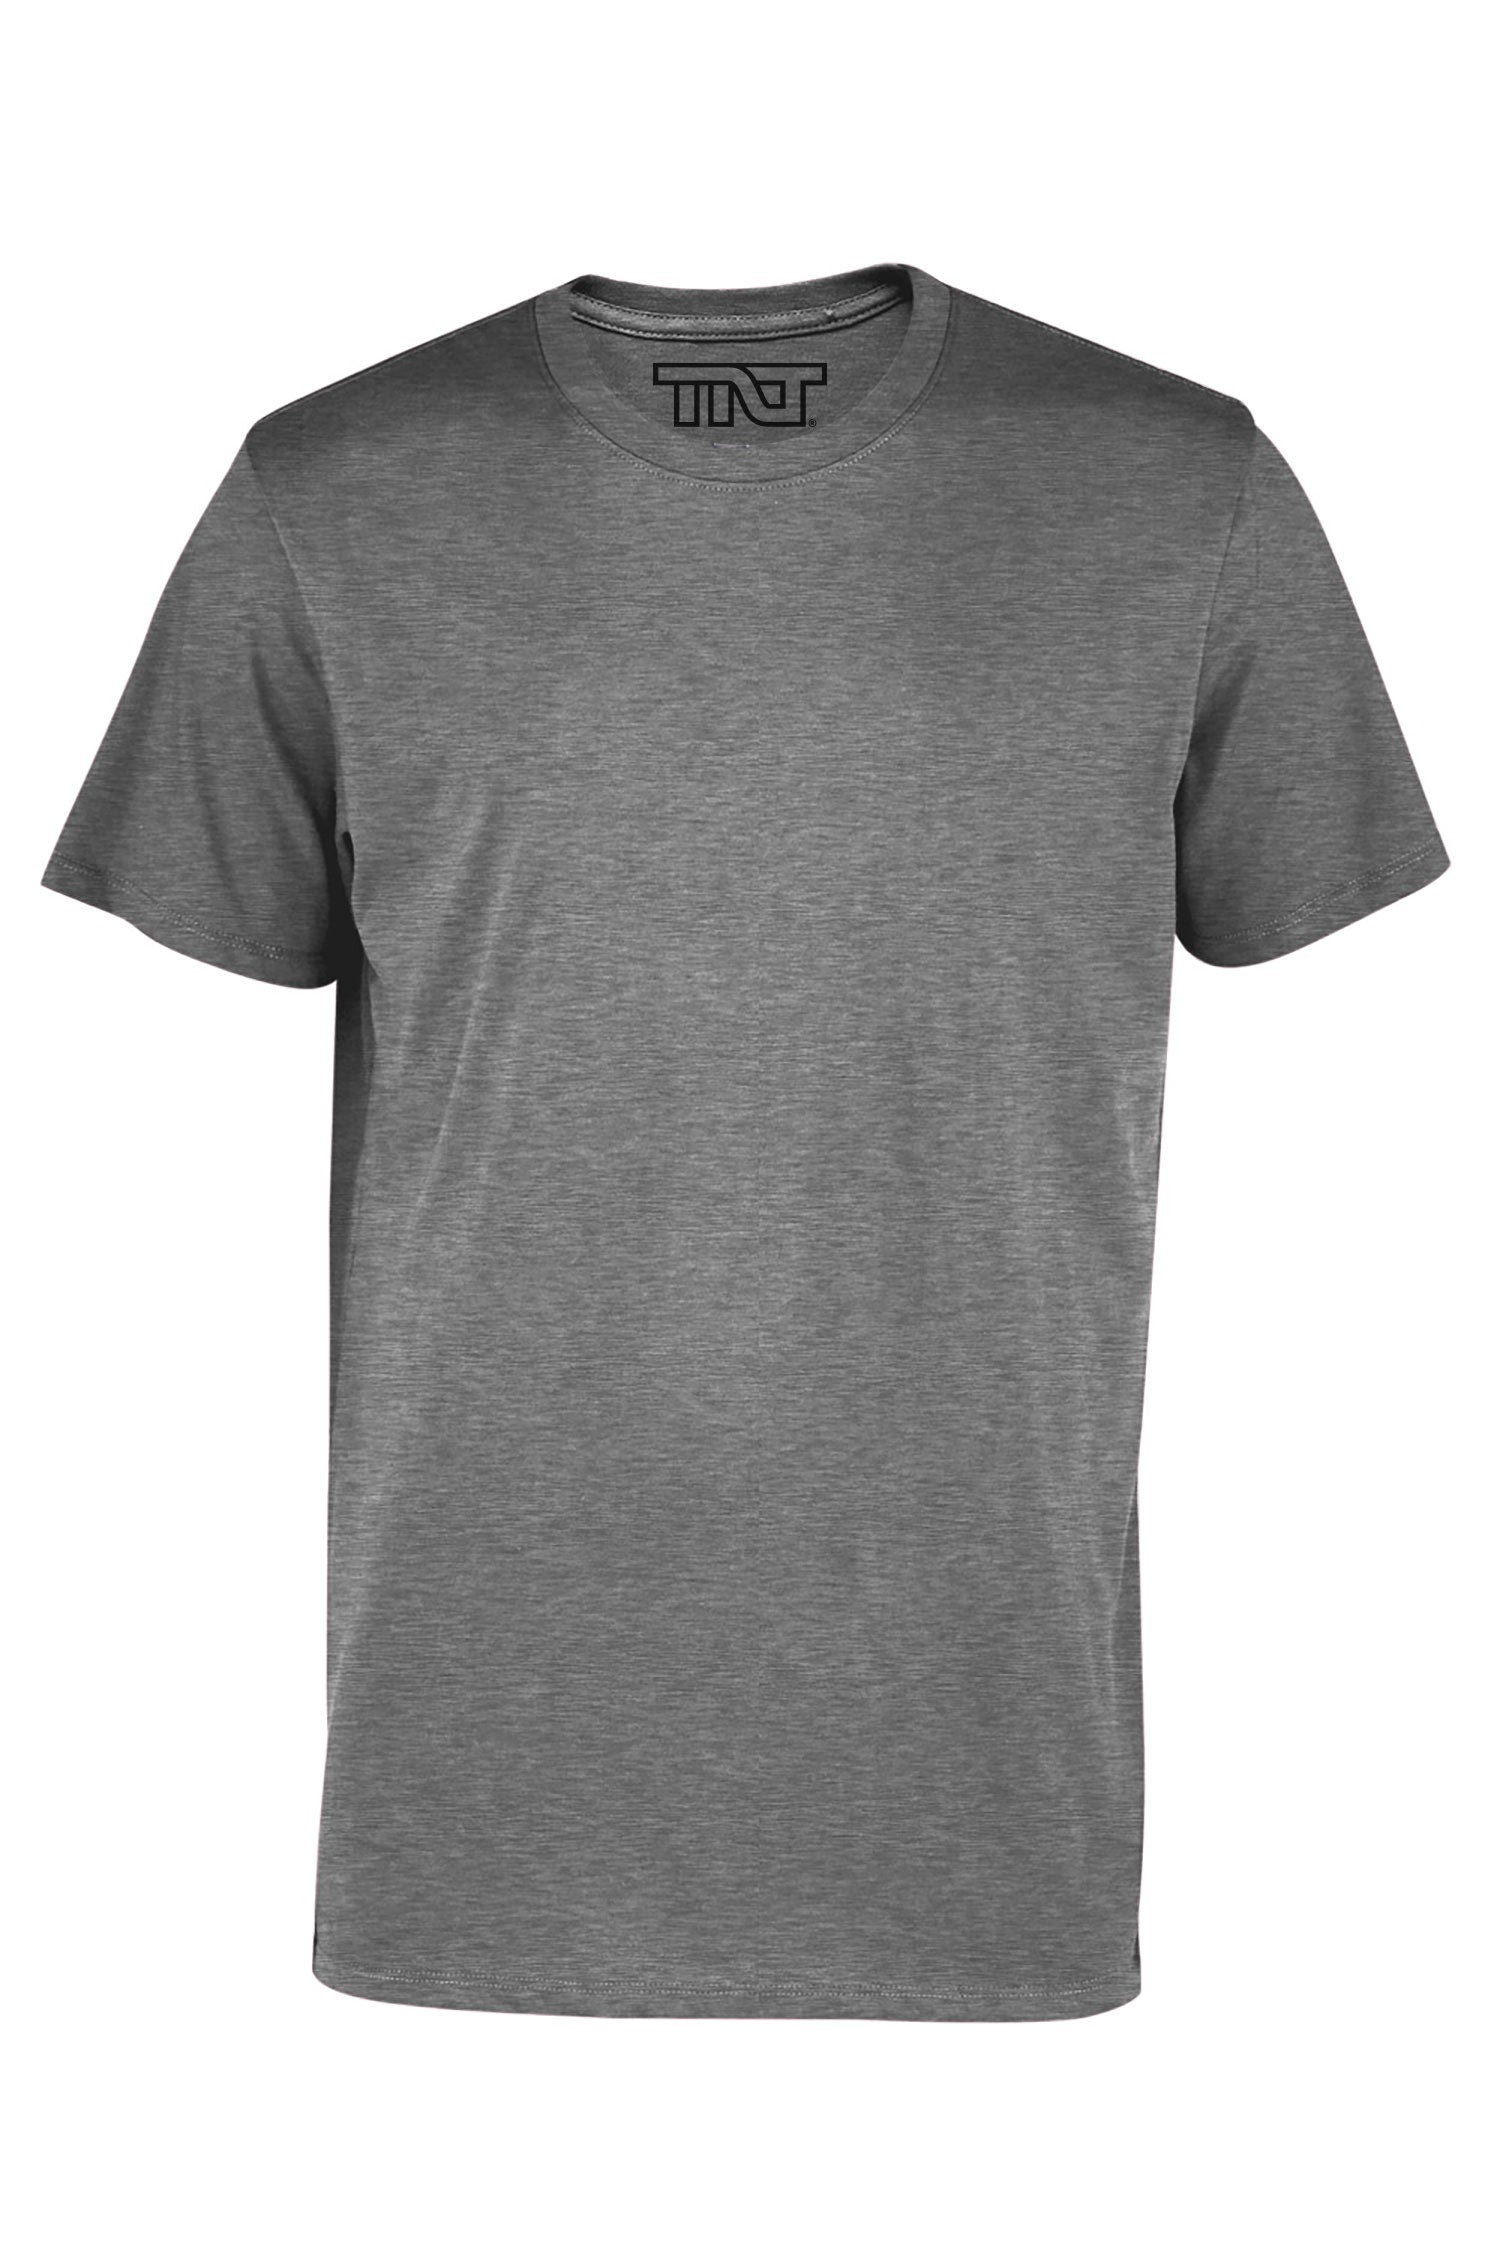 Boys' Grateful Dead Ringer Short Sleeve Graphic T-Shirt - Heather Gray XS